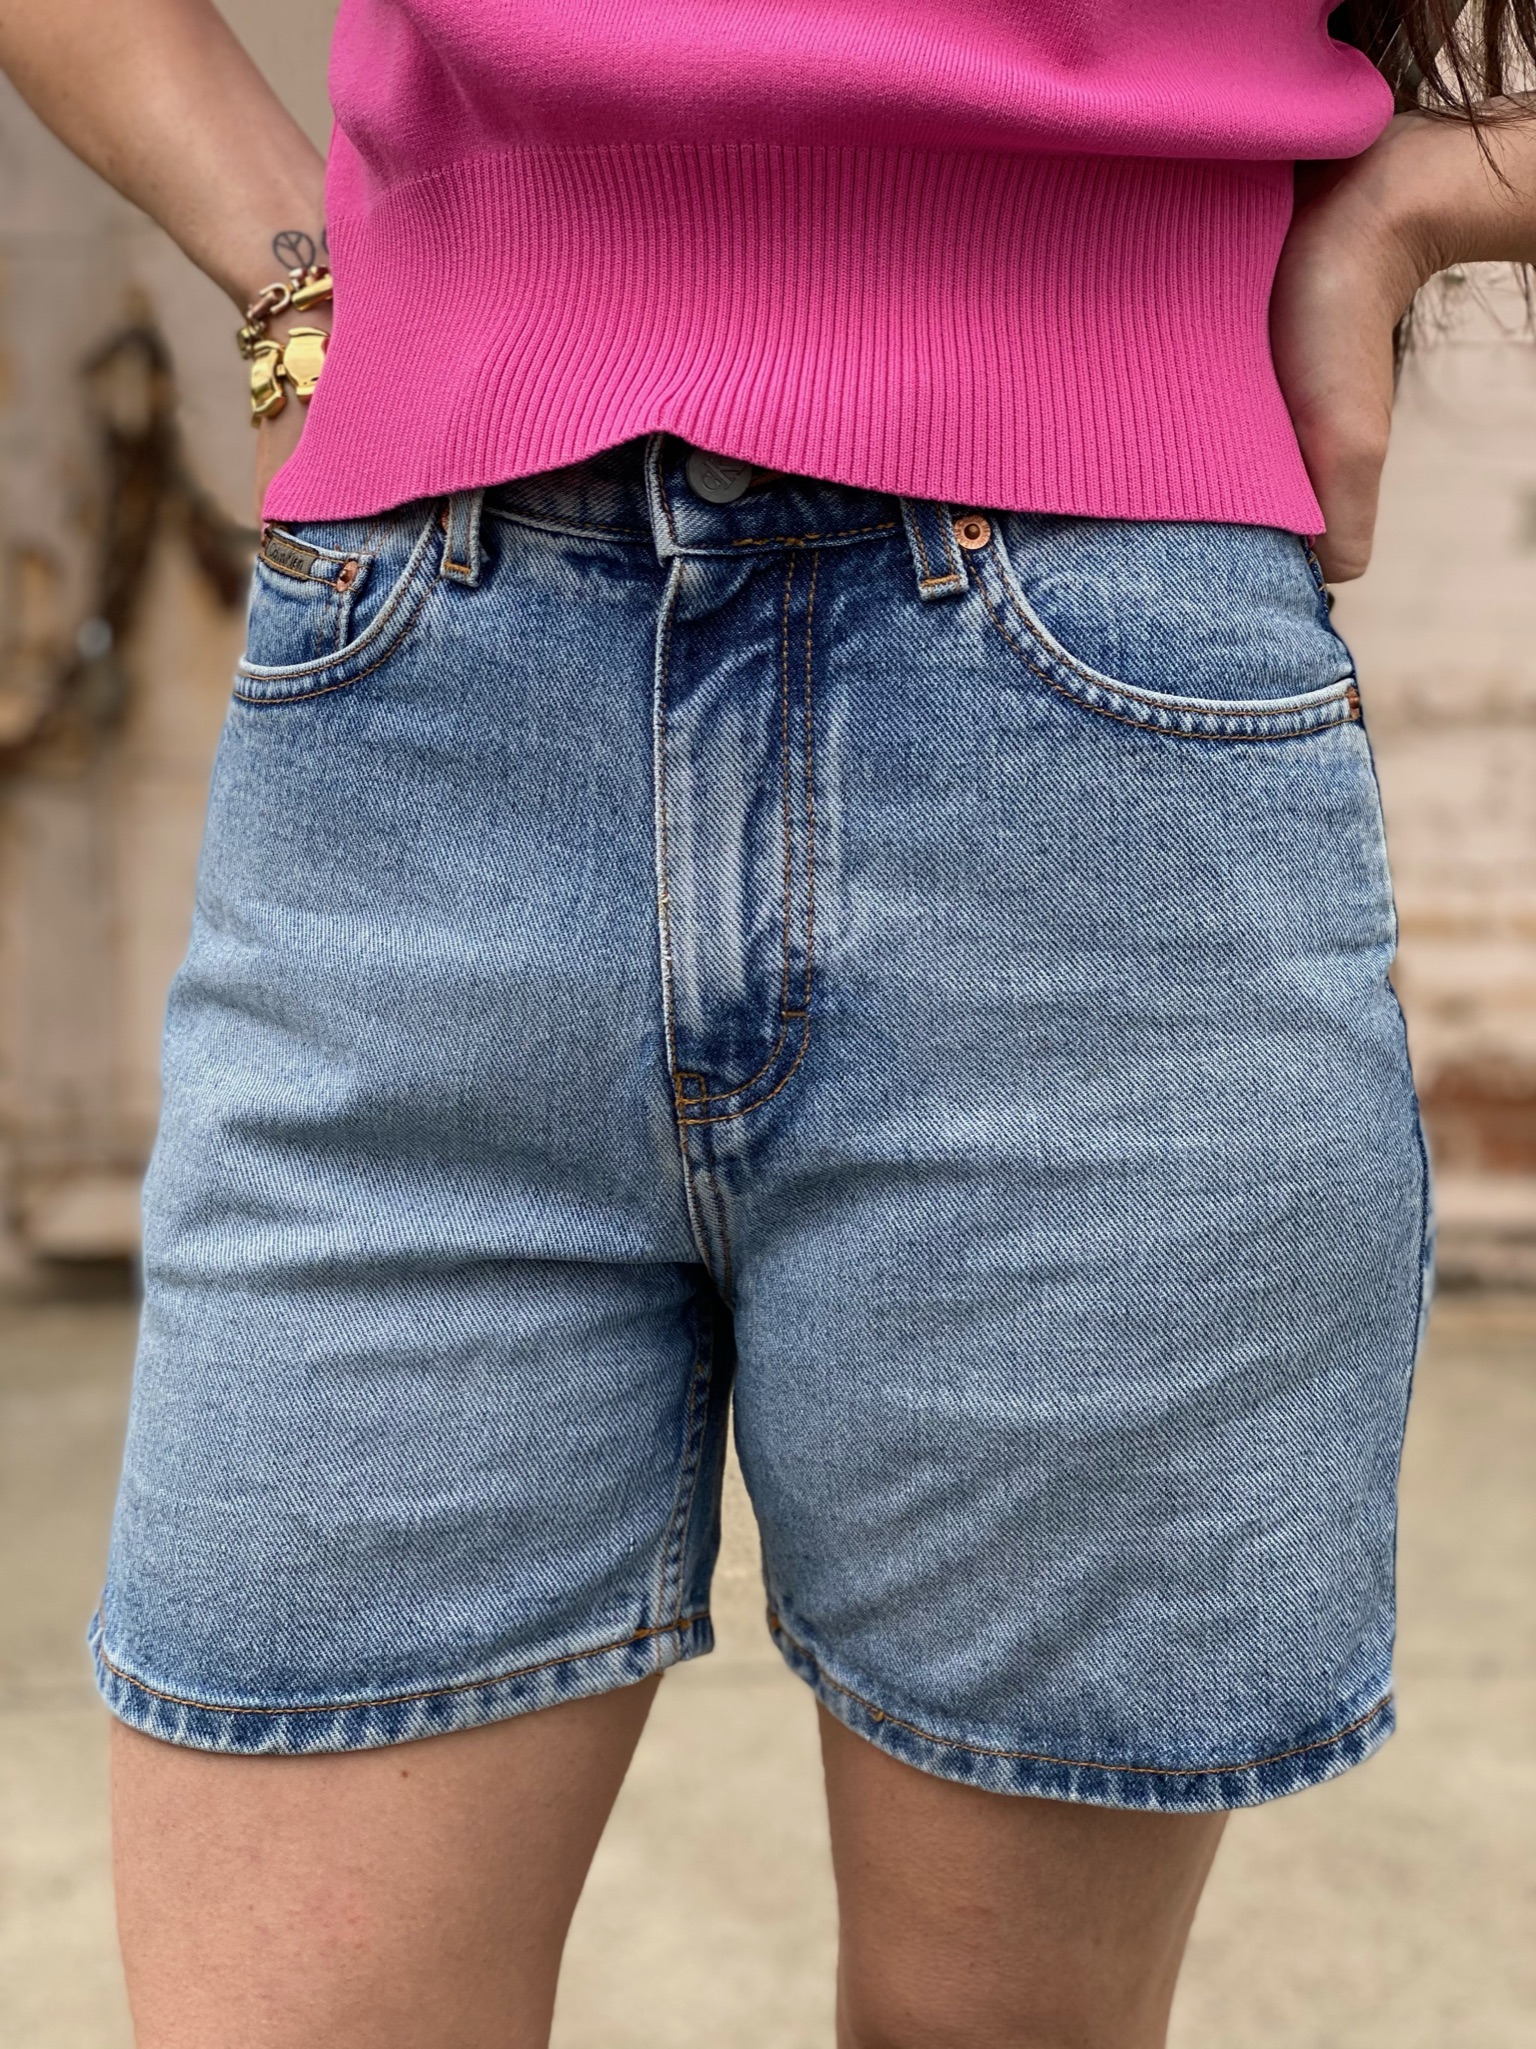 Vintage Denim Shorts